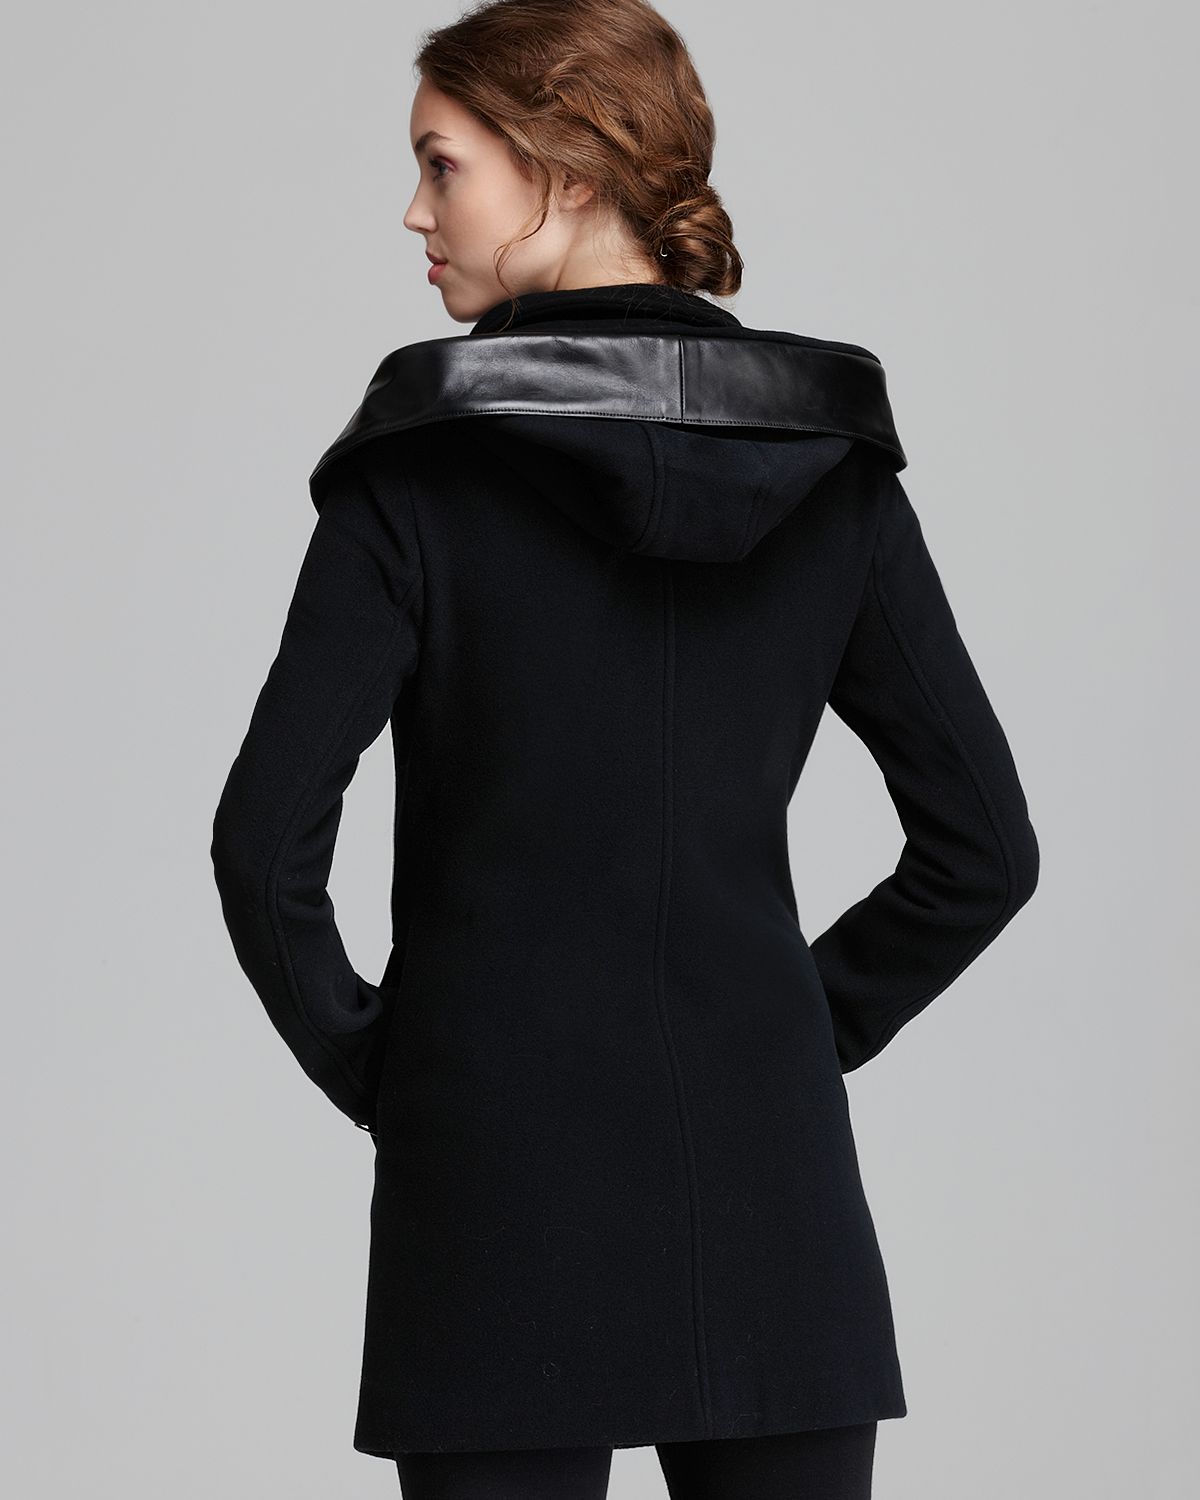 Black Coat Hood